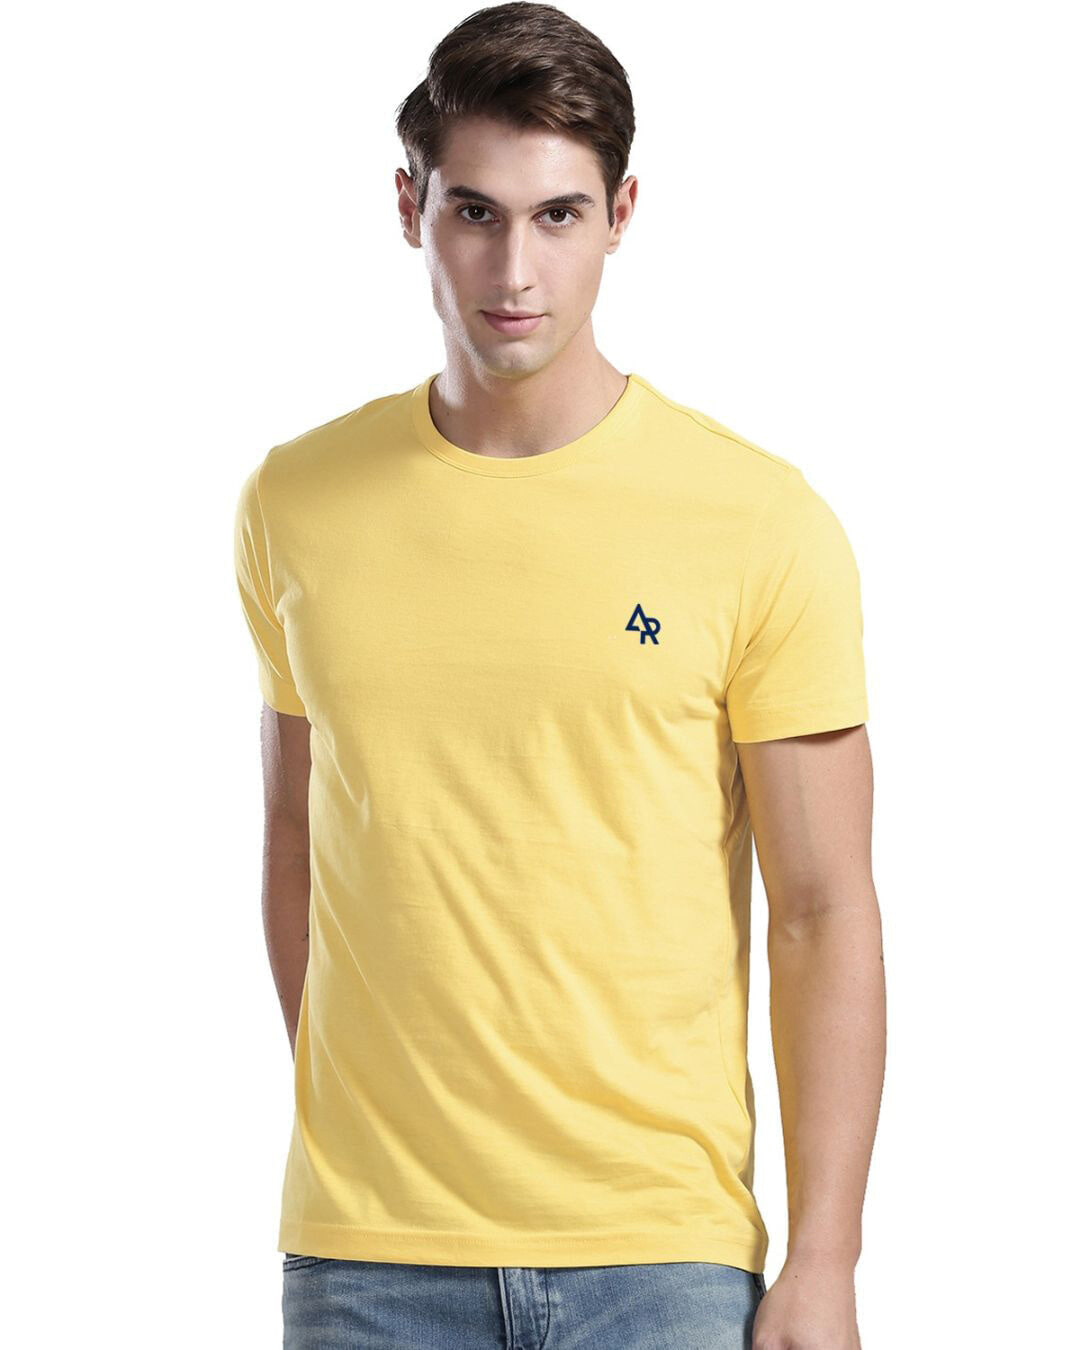 Buy Men's Cotton Brand Logo Printed T-shirt for Men Online at Bewakoof